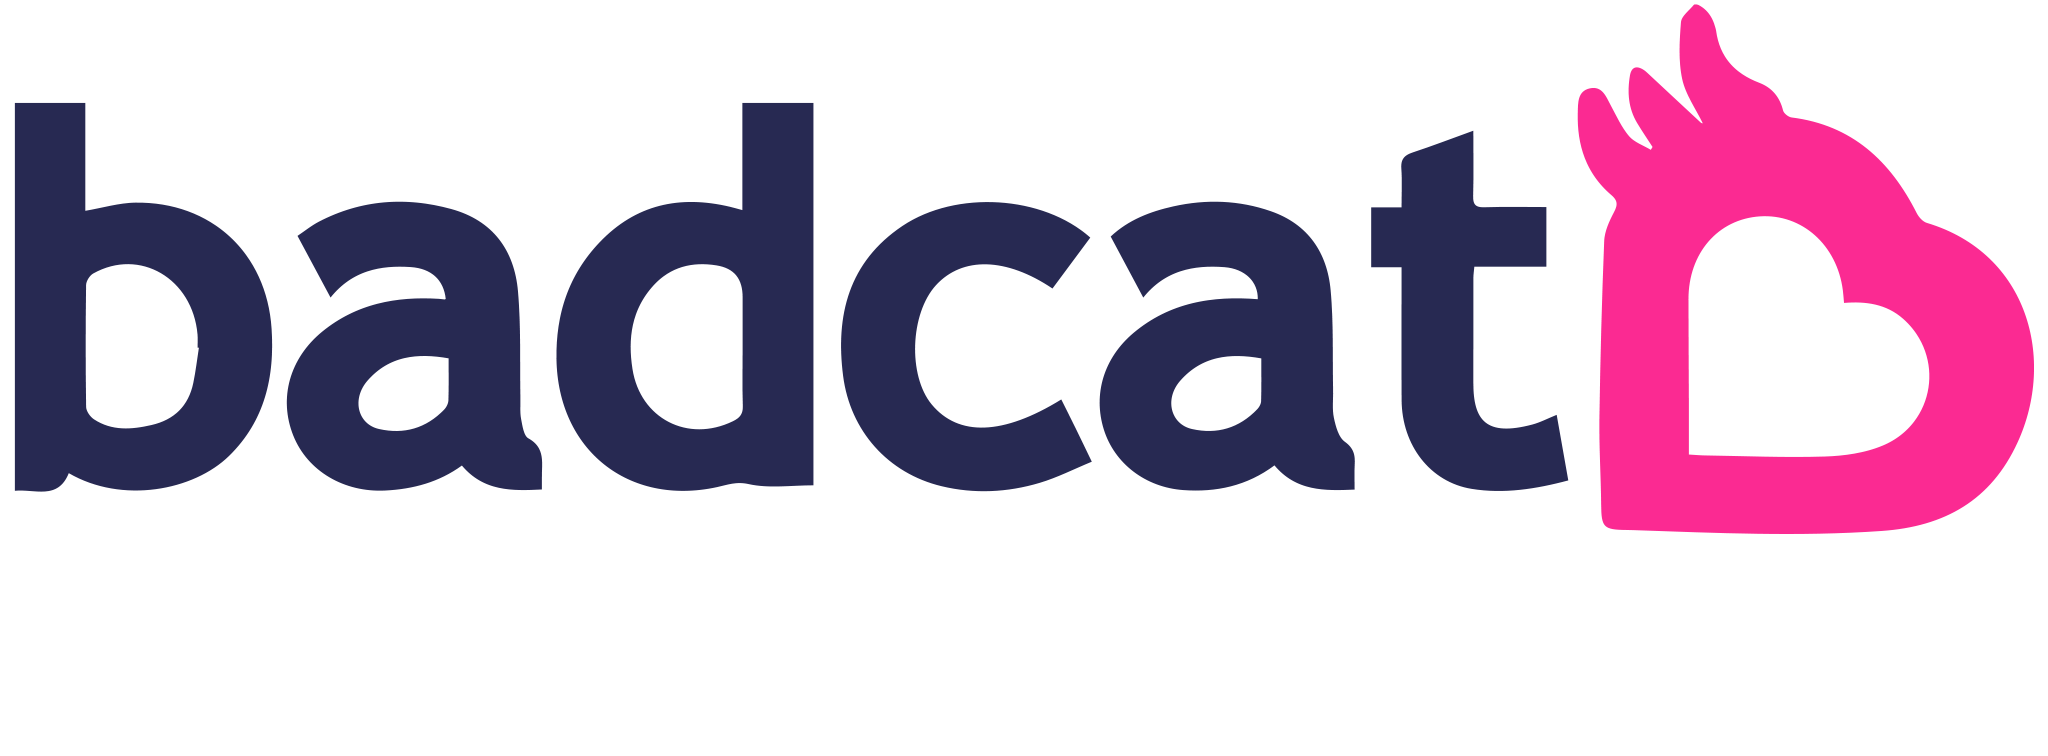 Kit de Meia Badcat Animais - Compre agora | Badcat Store